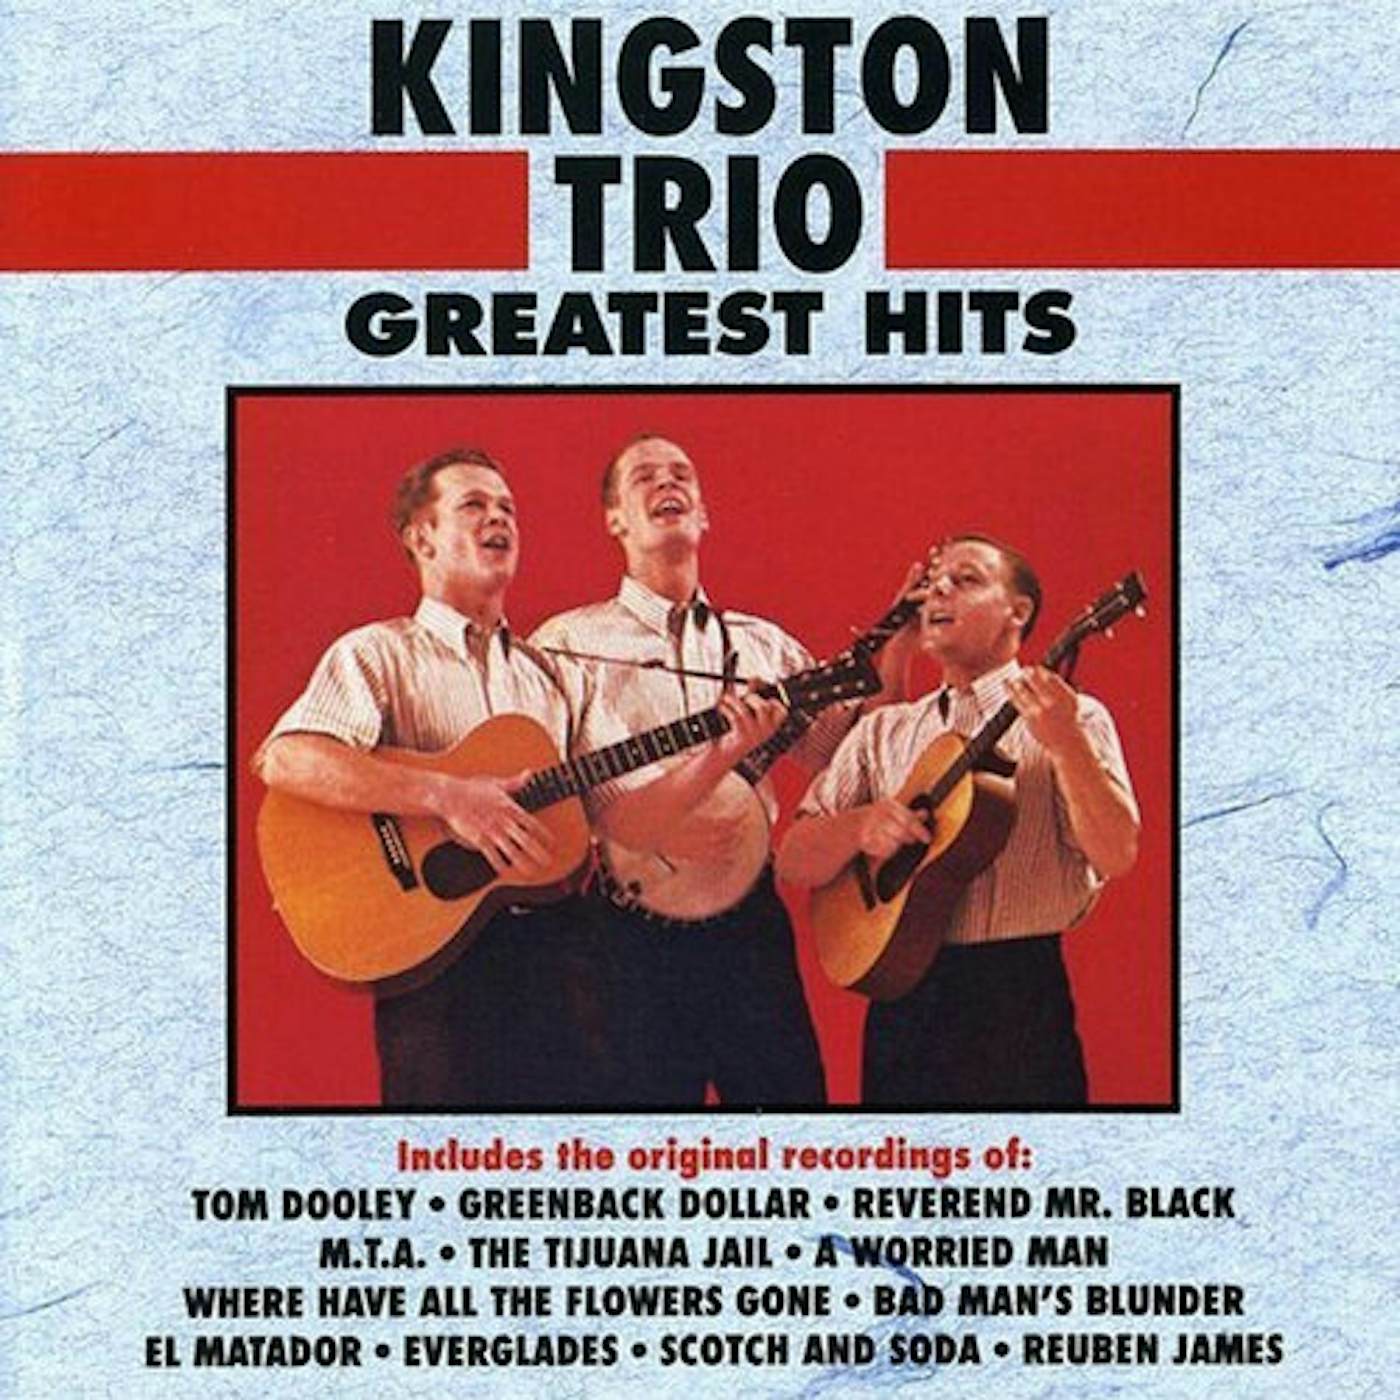 The Kingston Trio Greatest Hits Vinyl Record